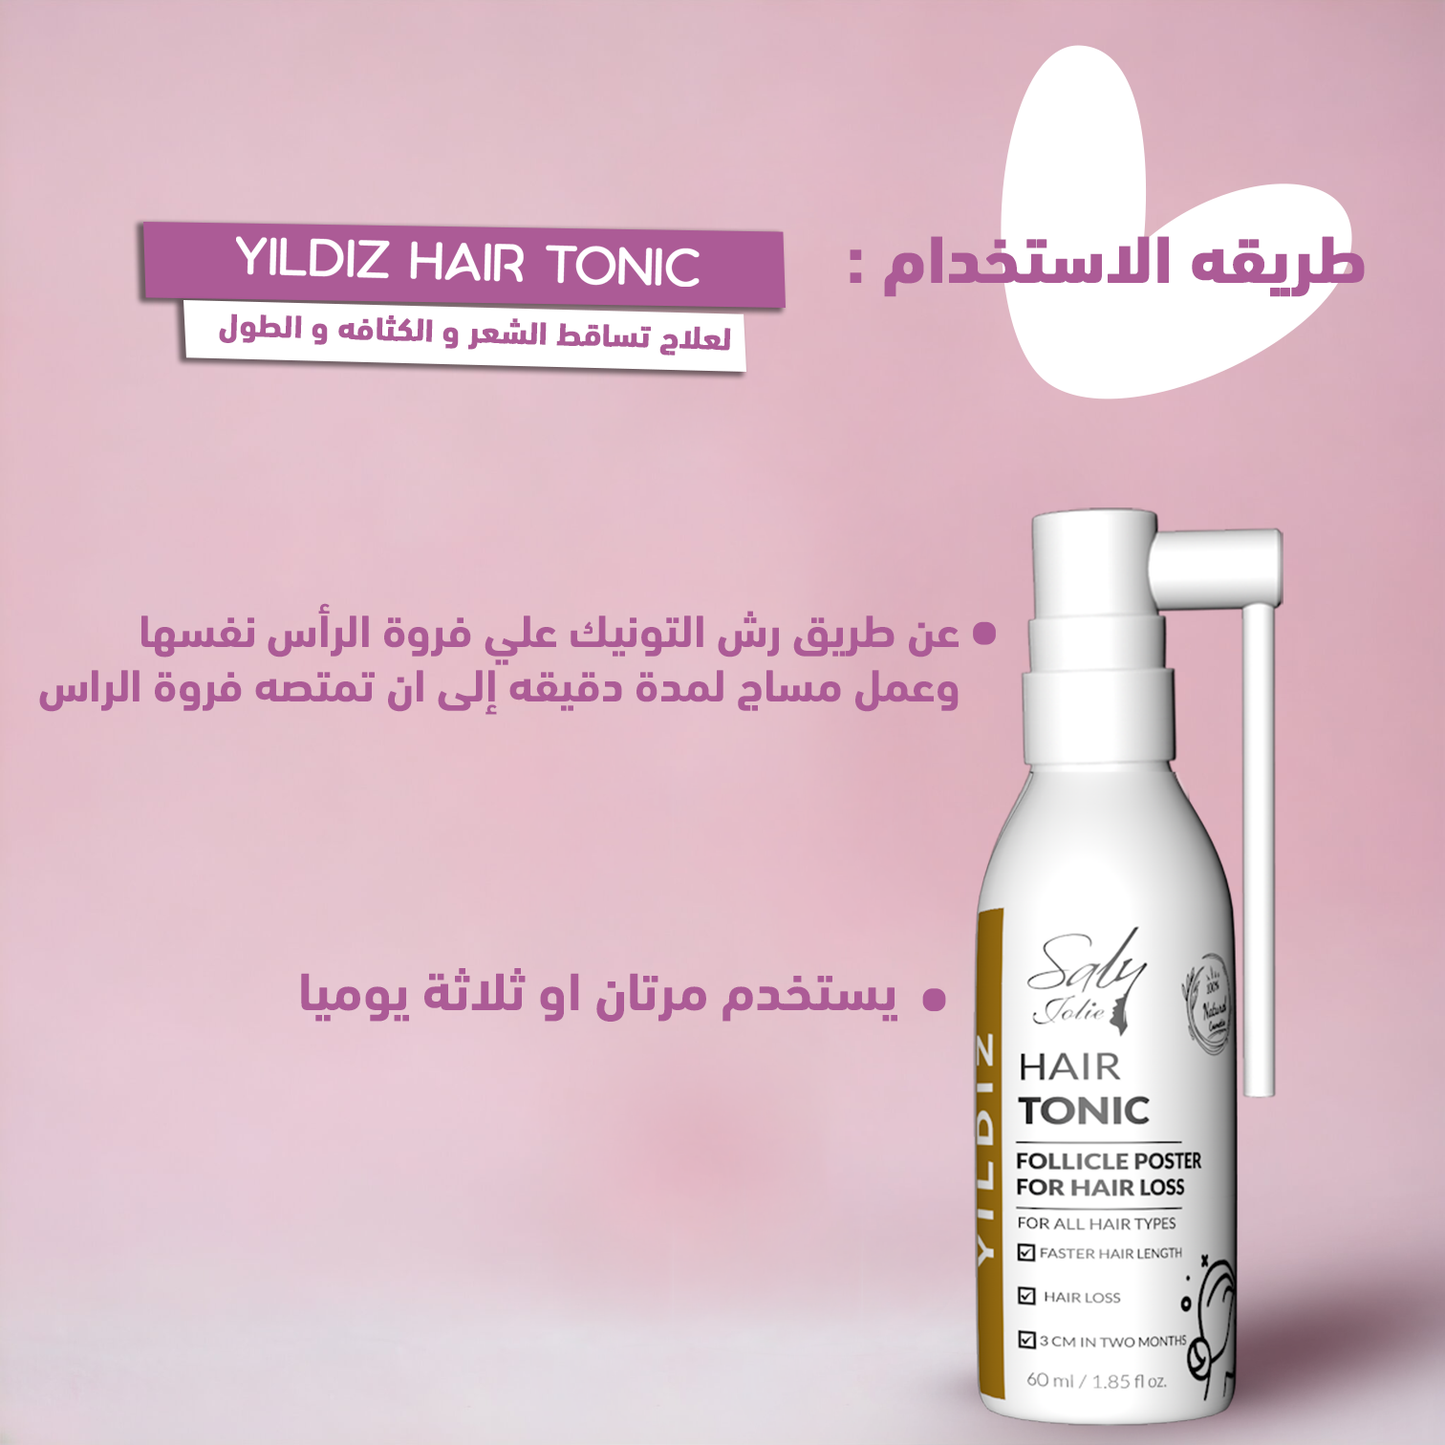 Yildiz Hair Tonic Follicle poster-60 ml-for hair loss